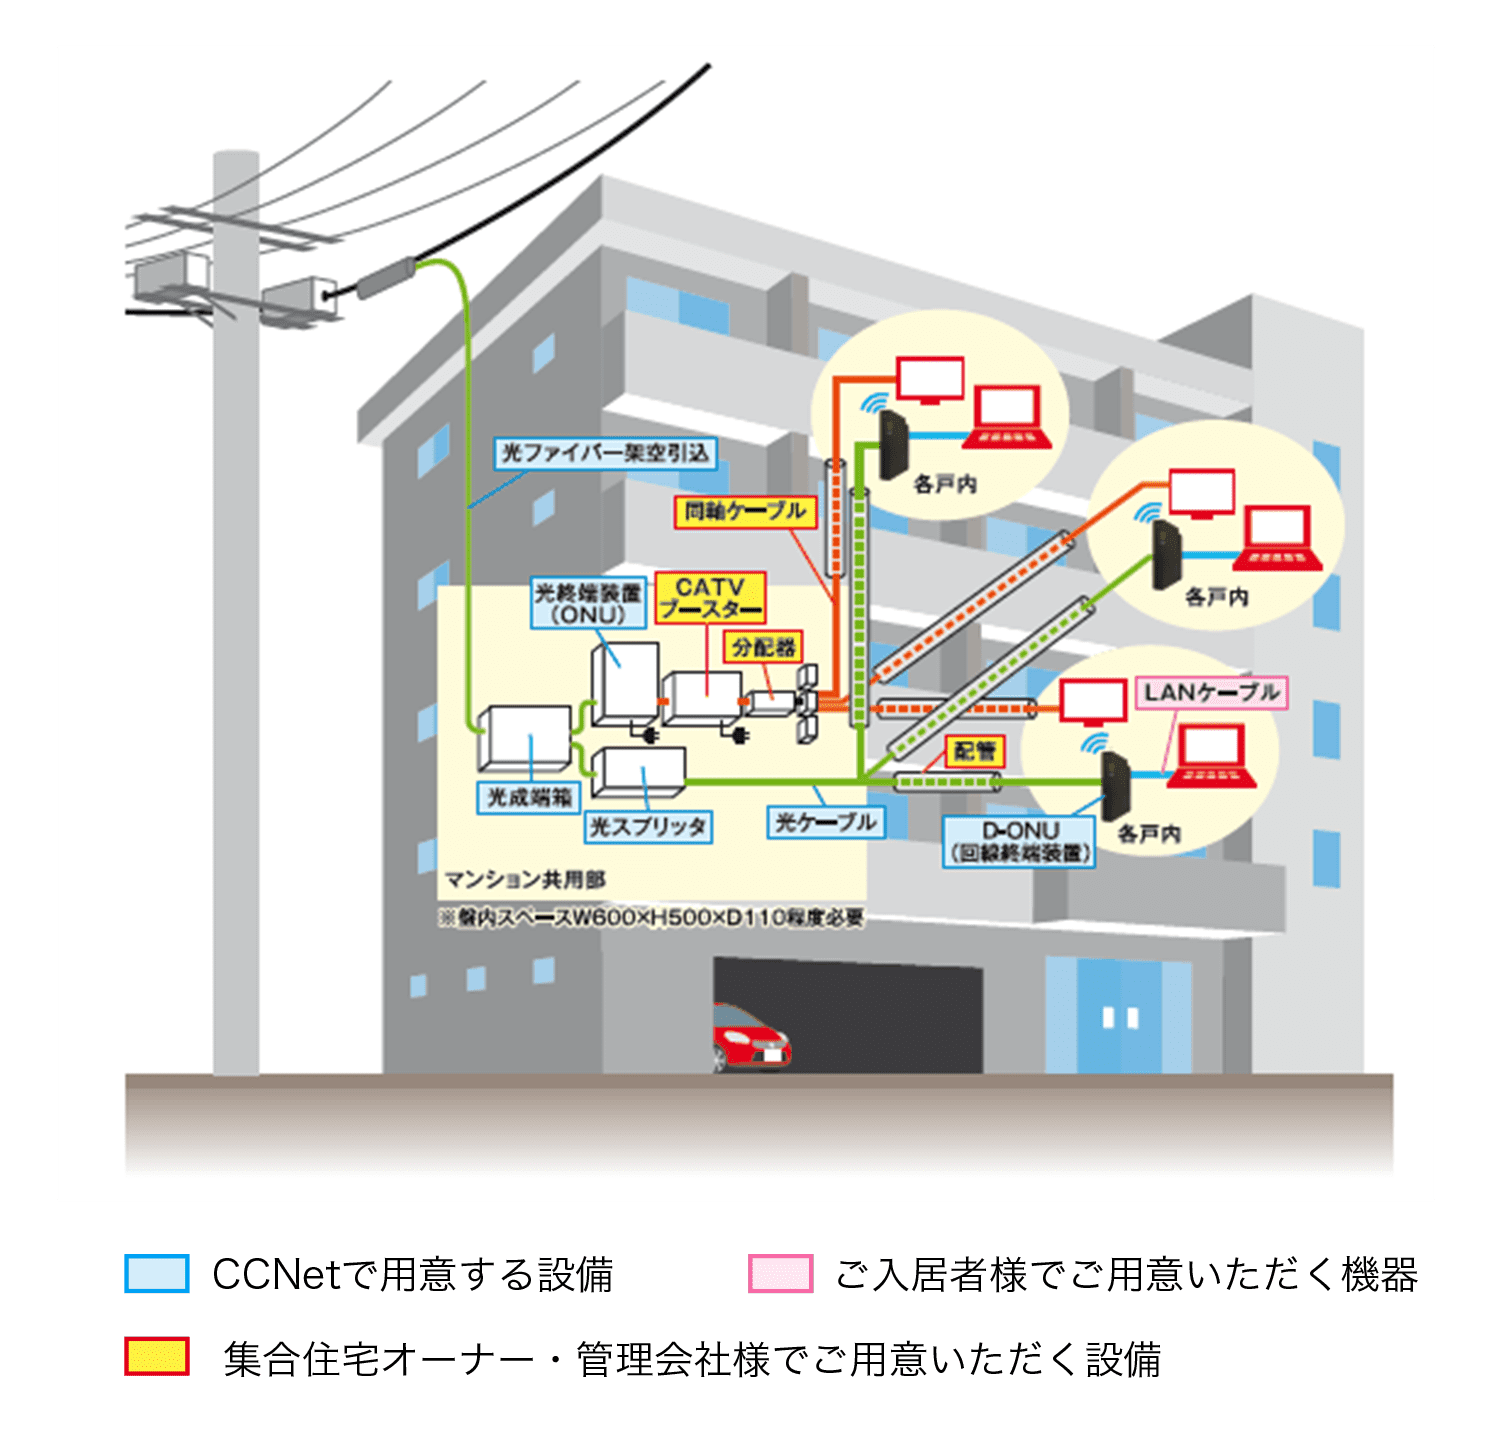 CCNetで用意する設備：光ファイバー架空引込、光終端装置（ONU）、光成端箱、光スプリッタ、光ケーブル、D-ONU（回線終端装置） ご入居者様でご用意いただく機器：LANケーブル 集合住宅オーナー・管理会社様でご用意いただく設備：CATVブースター、分配器、同軸ケーブル、配管